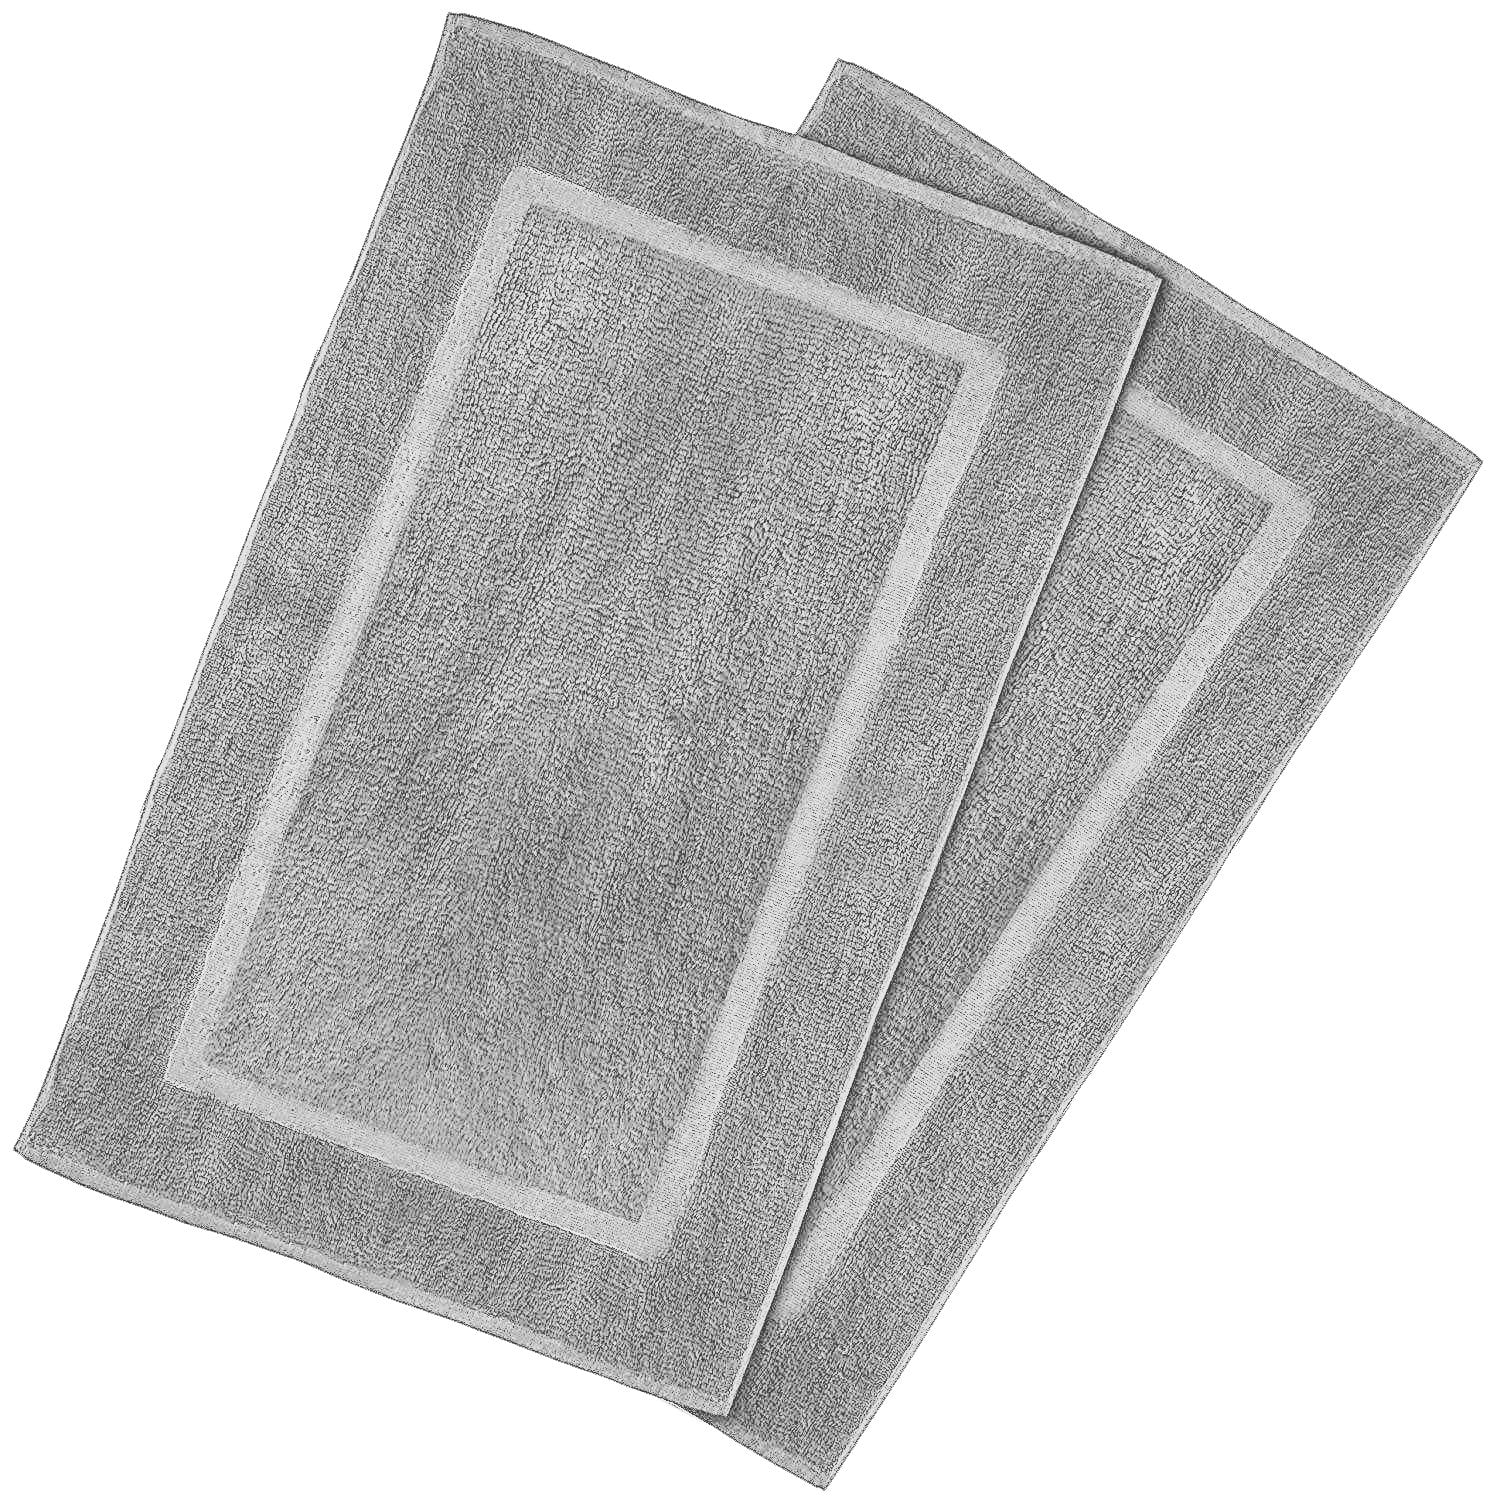 Goza Towels Cotton Bath Mat 2 Pack, 20 x 31 inches 